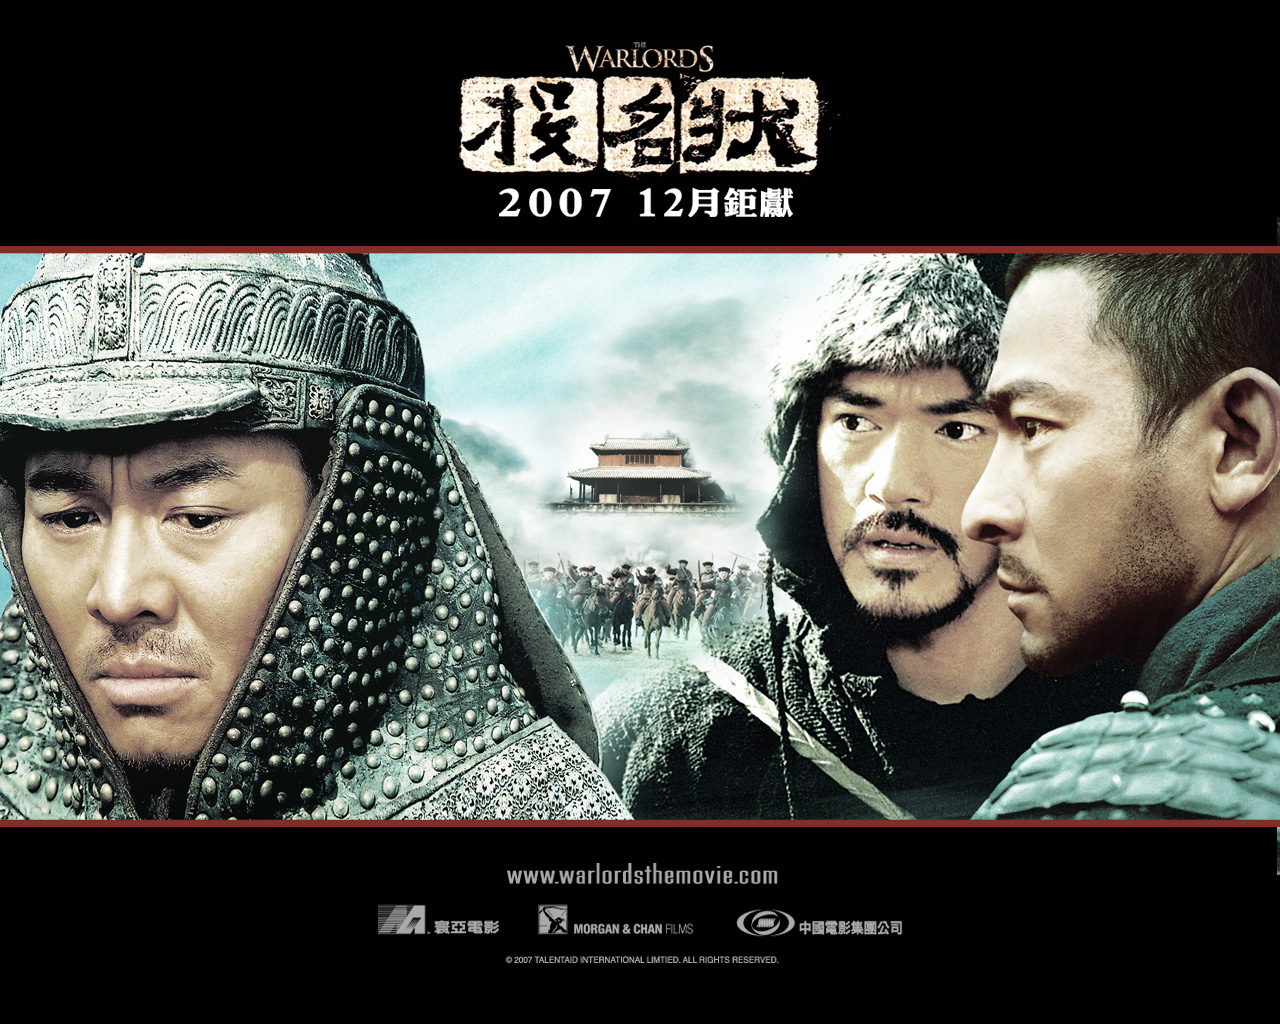 Download HQ Tau Ming Chong wallpaper / Movies / 1280x1024